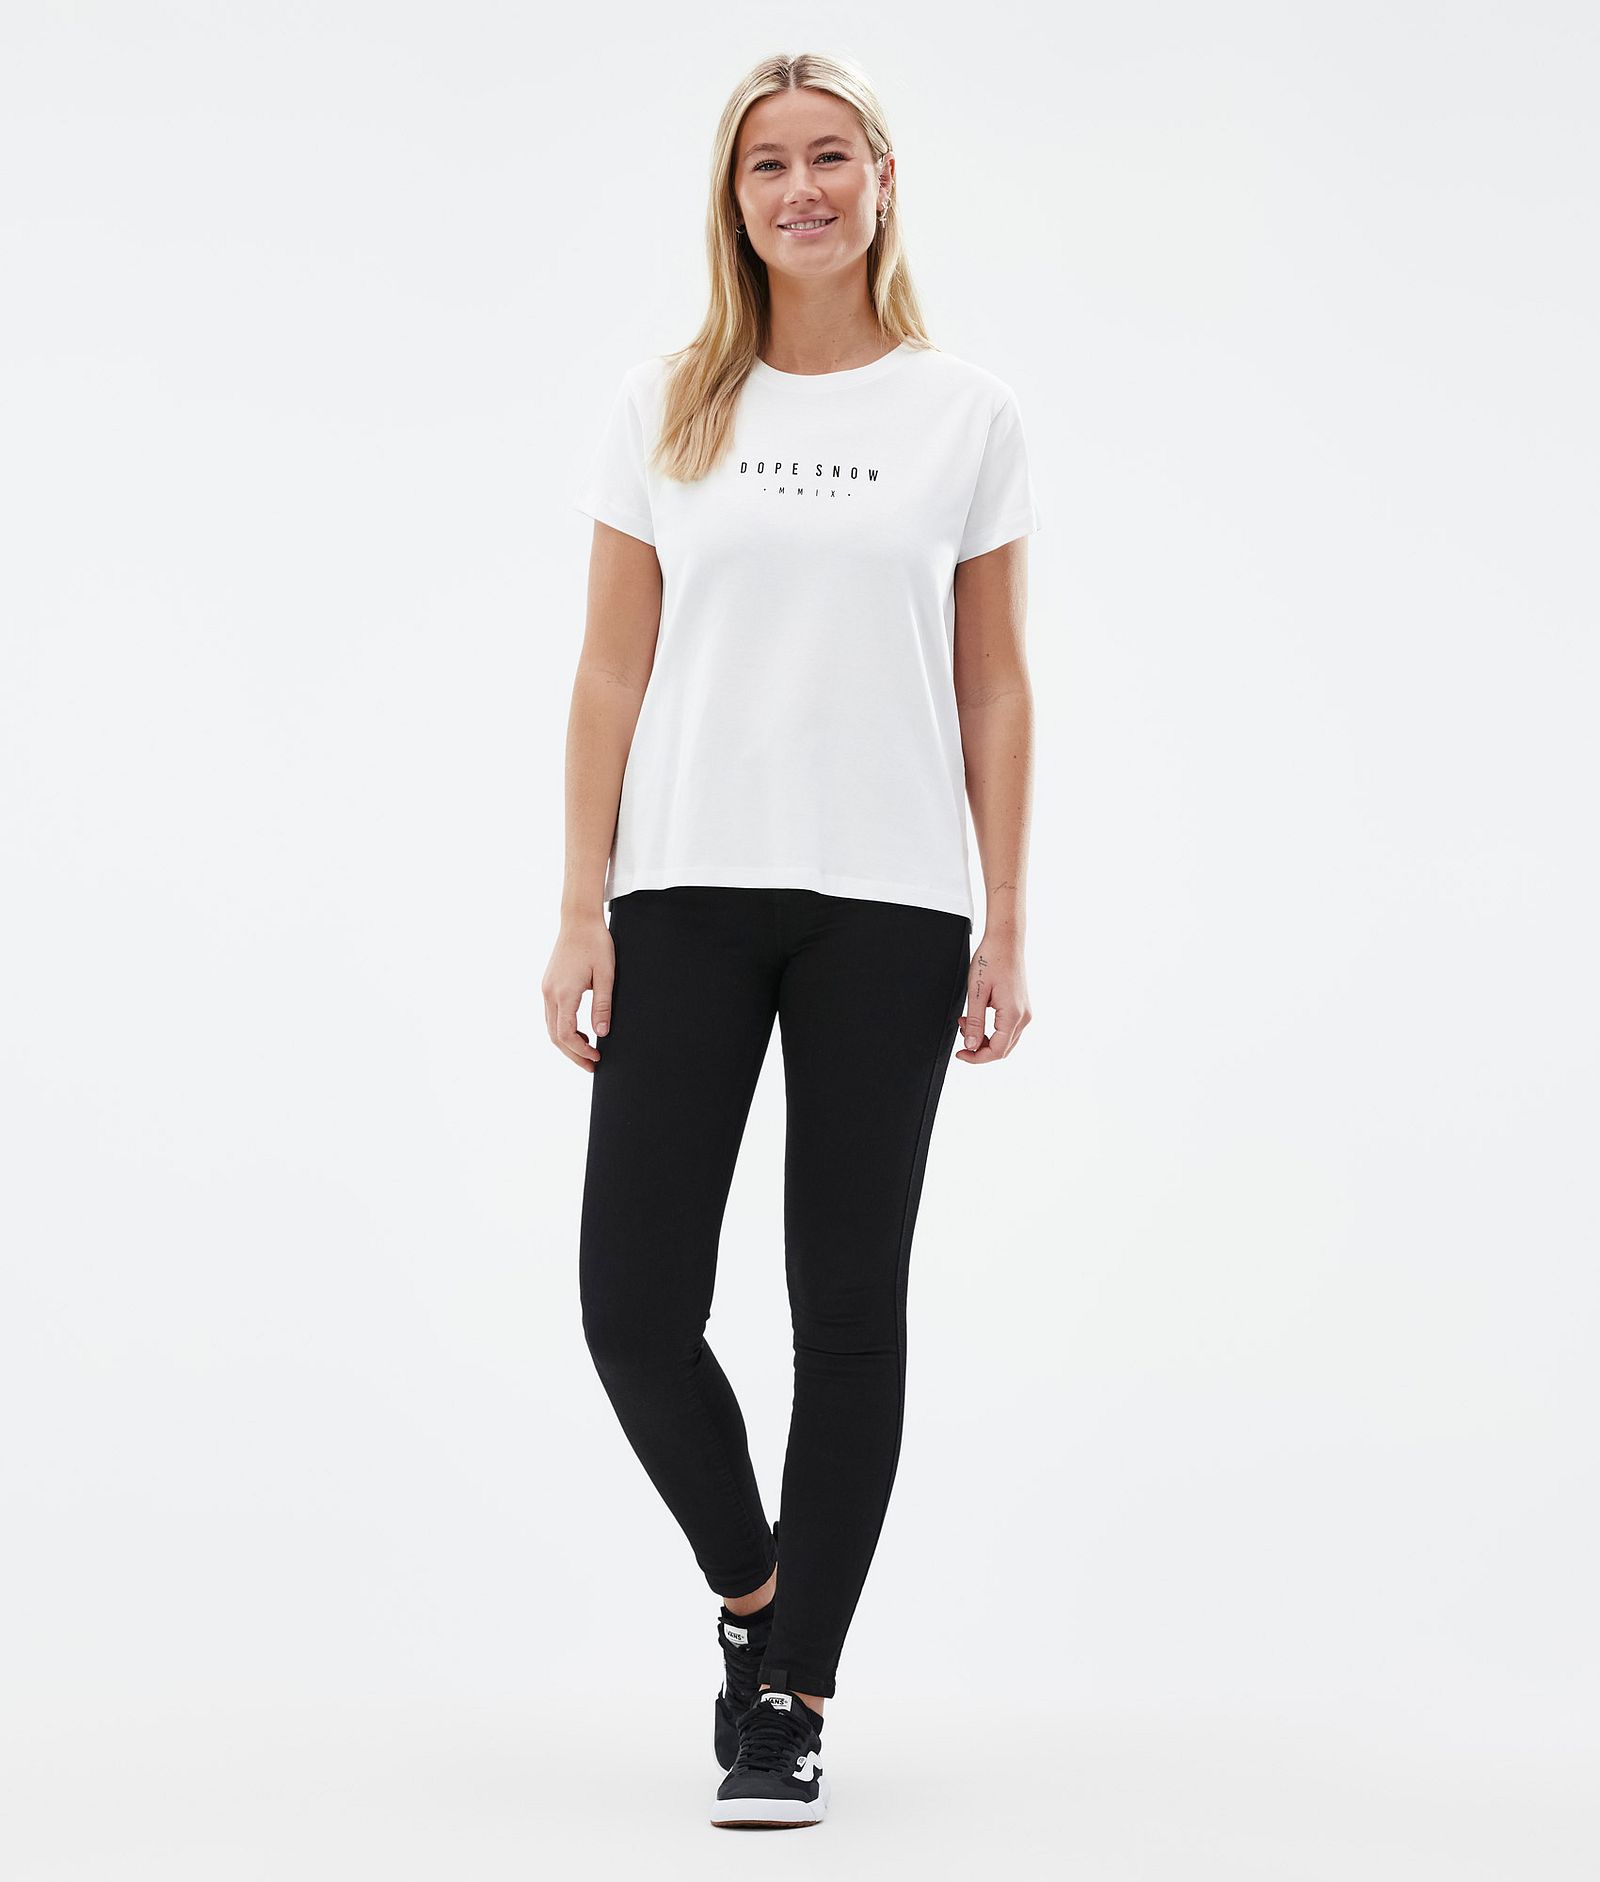 Dope Standard W T-shirt Dame Silhouette White